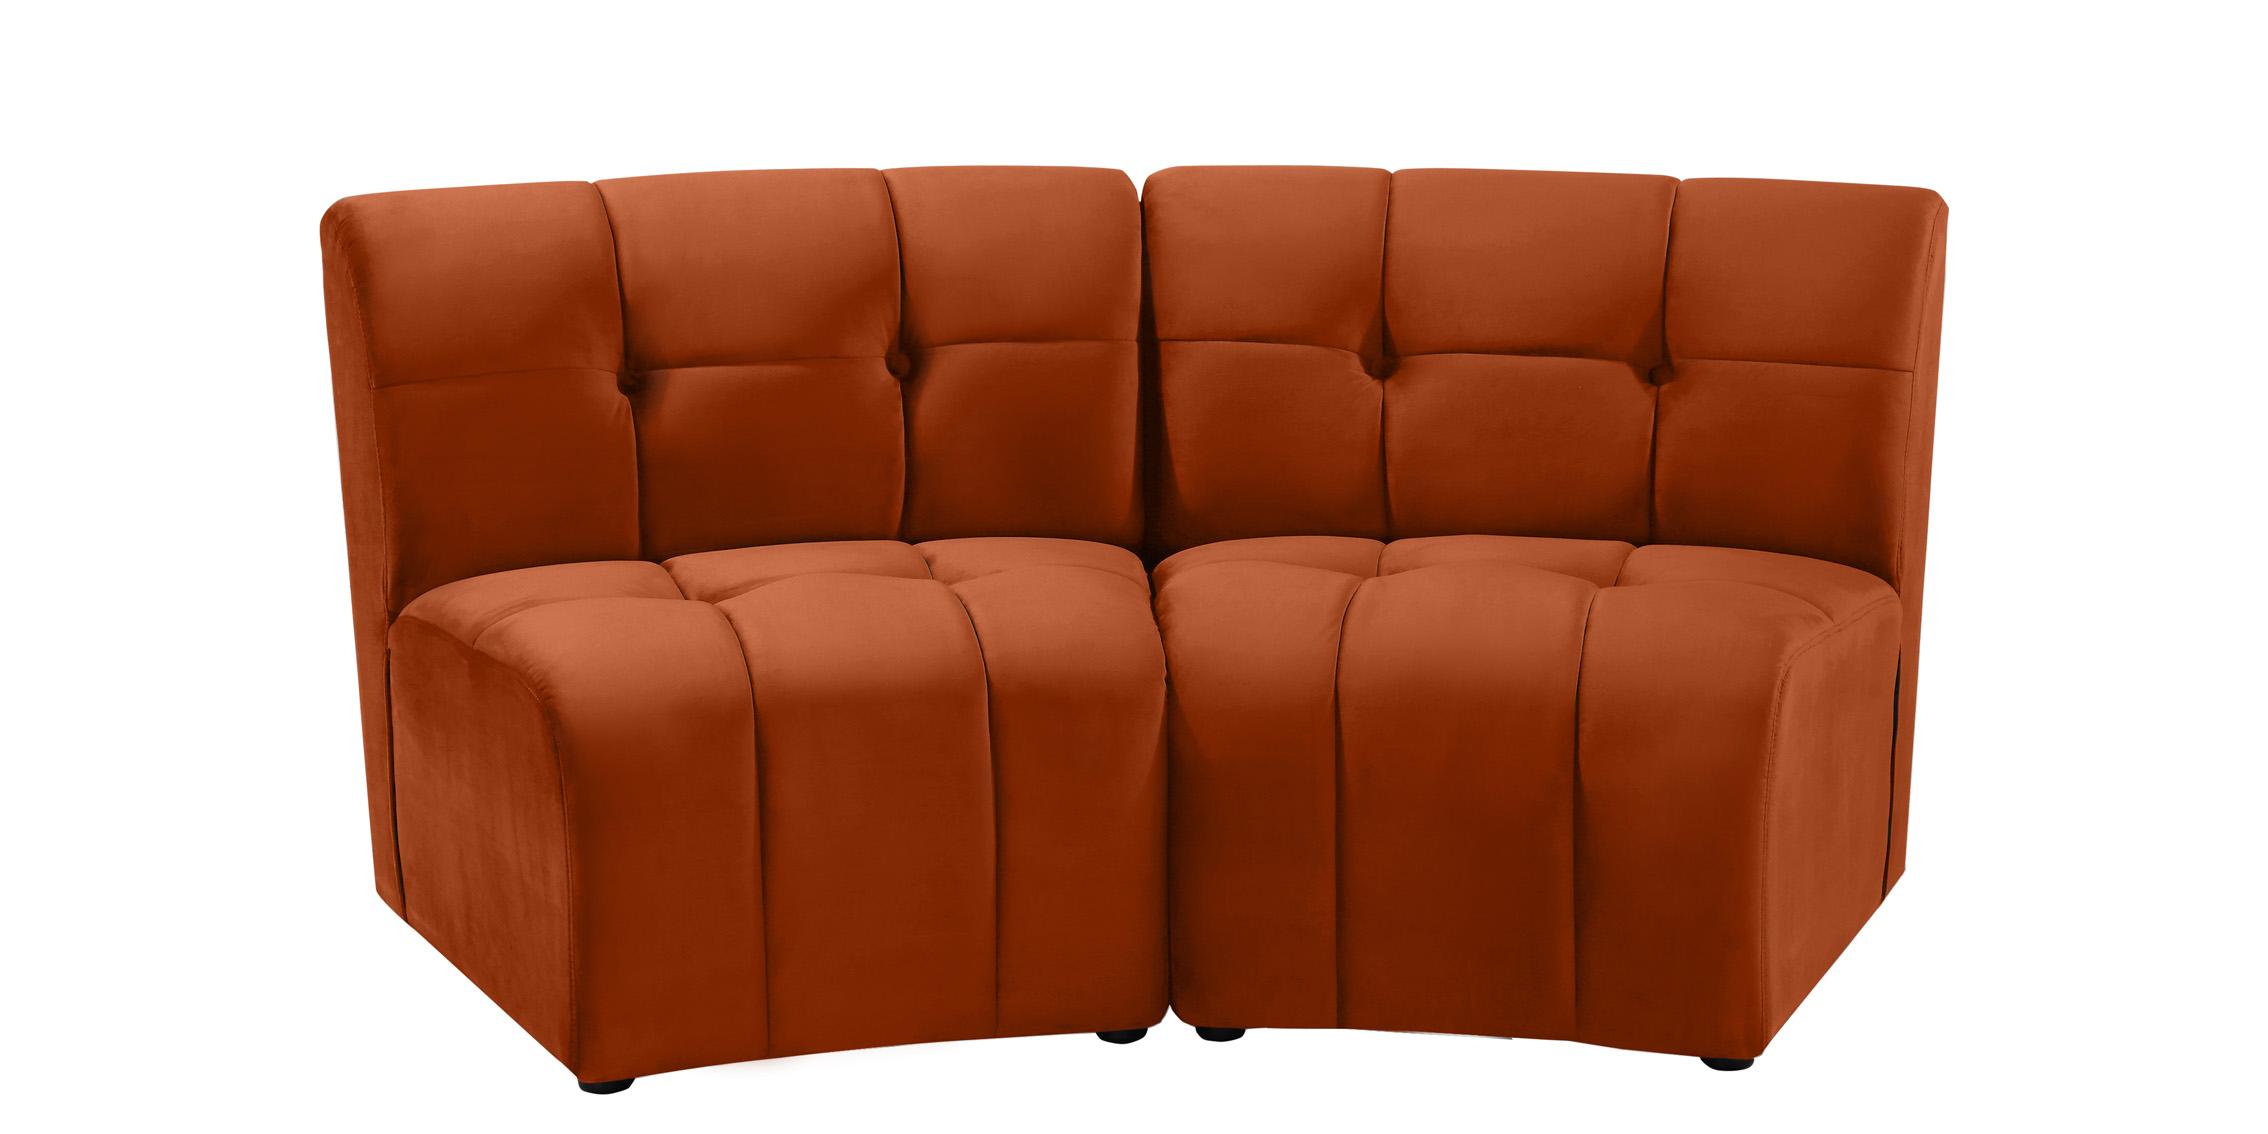 Contemporary, Modern Modular Sectional Sofa LIMITLESS 645Cognac-2PC 645Cognac-2PC in Cognac Velvet